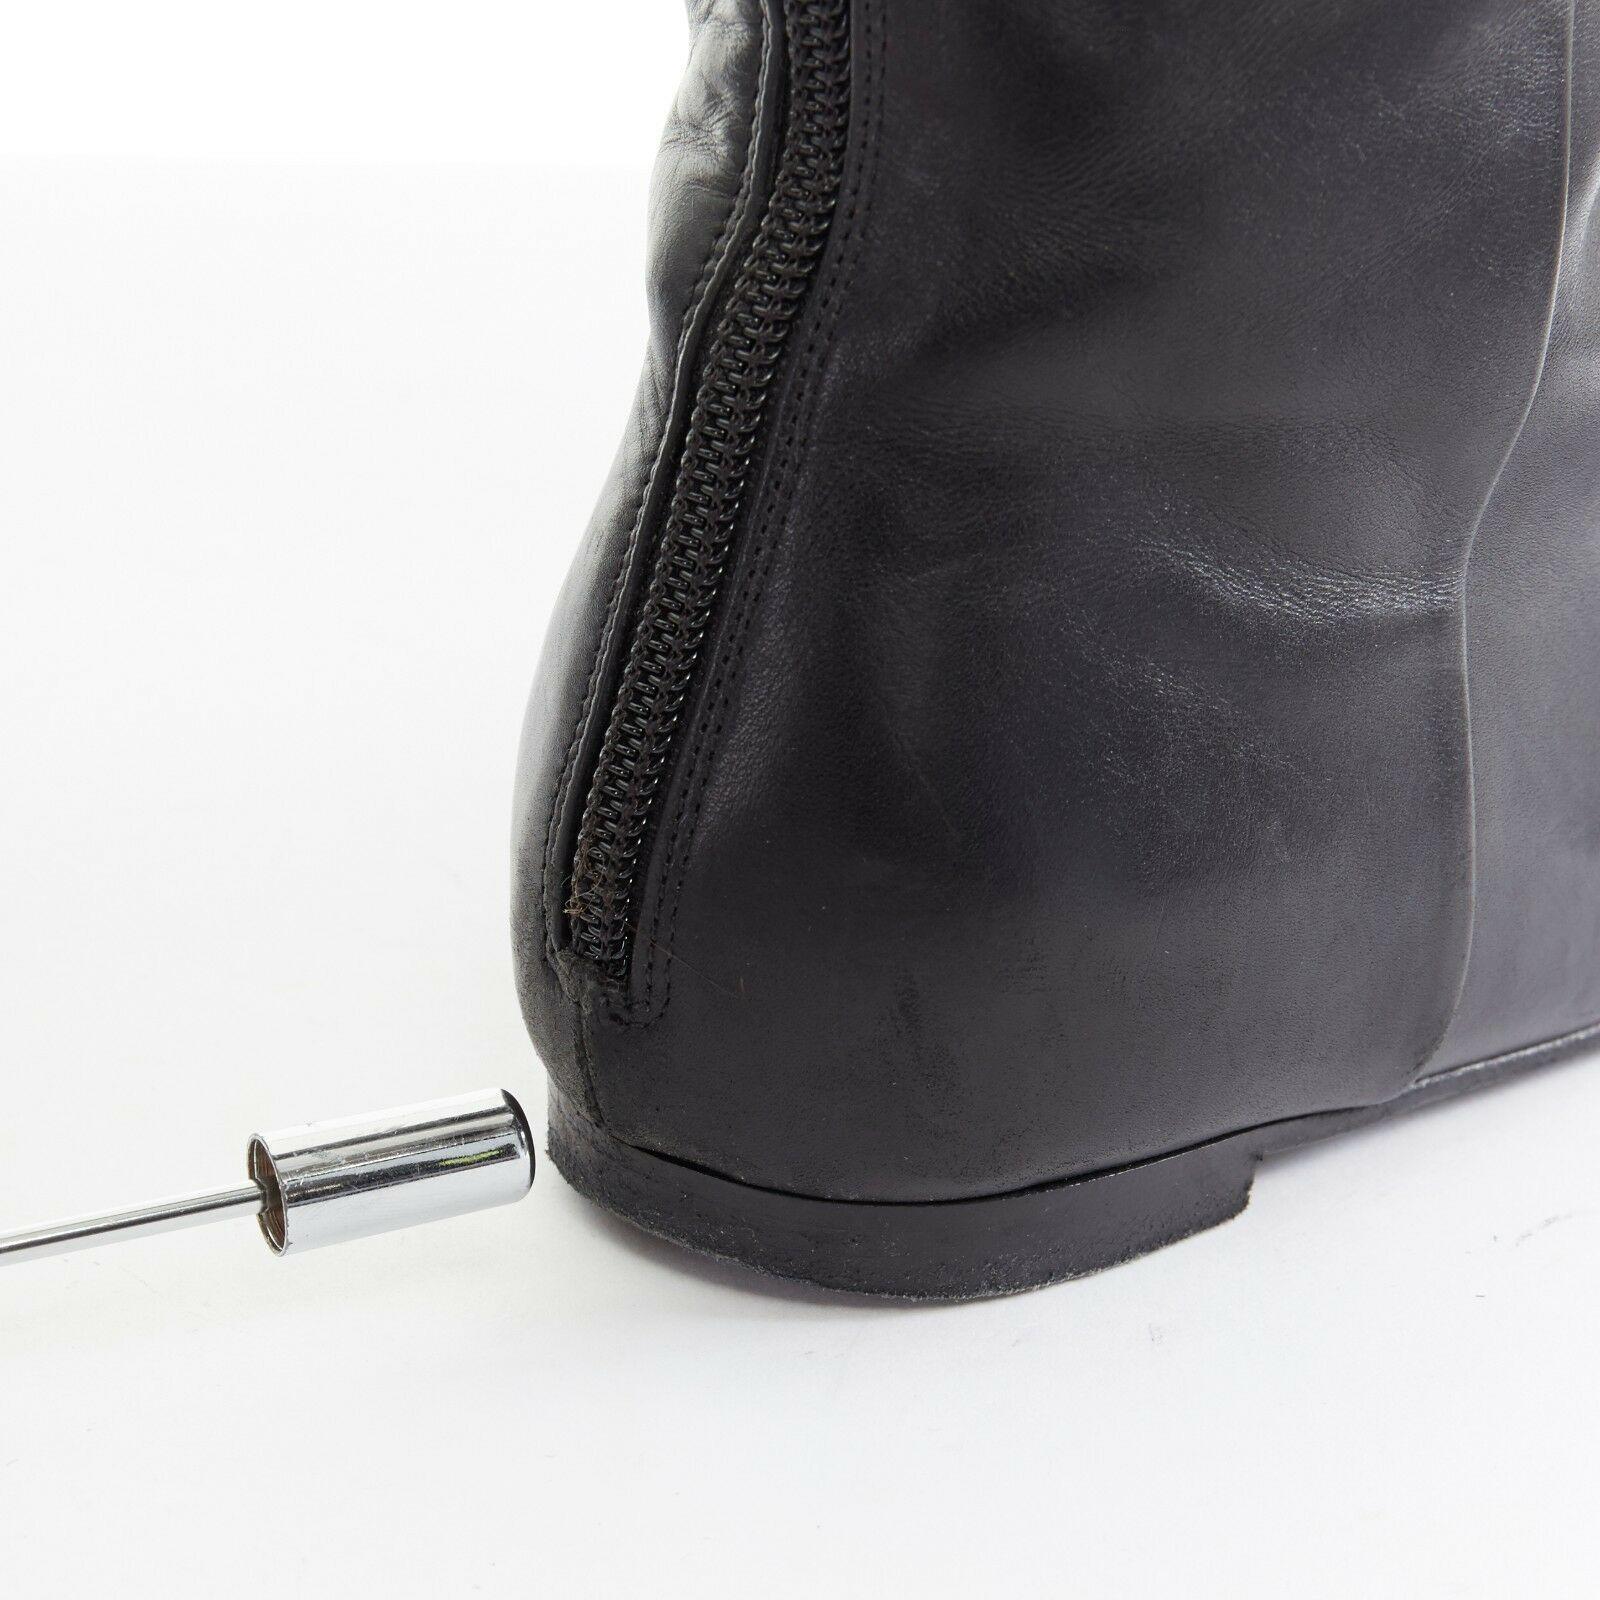 CHANEL black leather CC logo patent toe cap zip back flat high boot EU36 US6 UK3 4